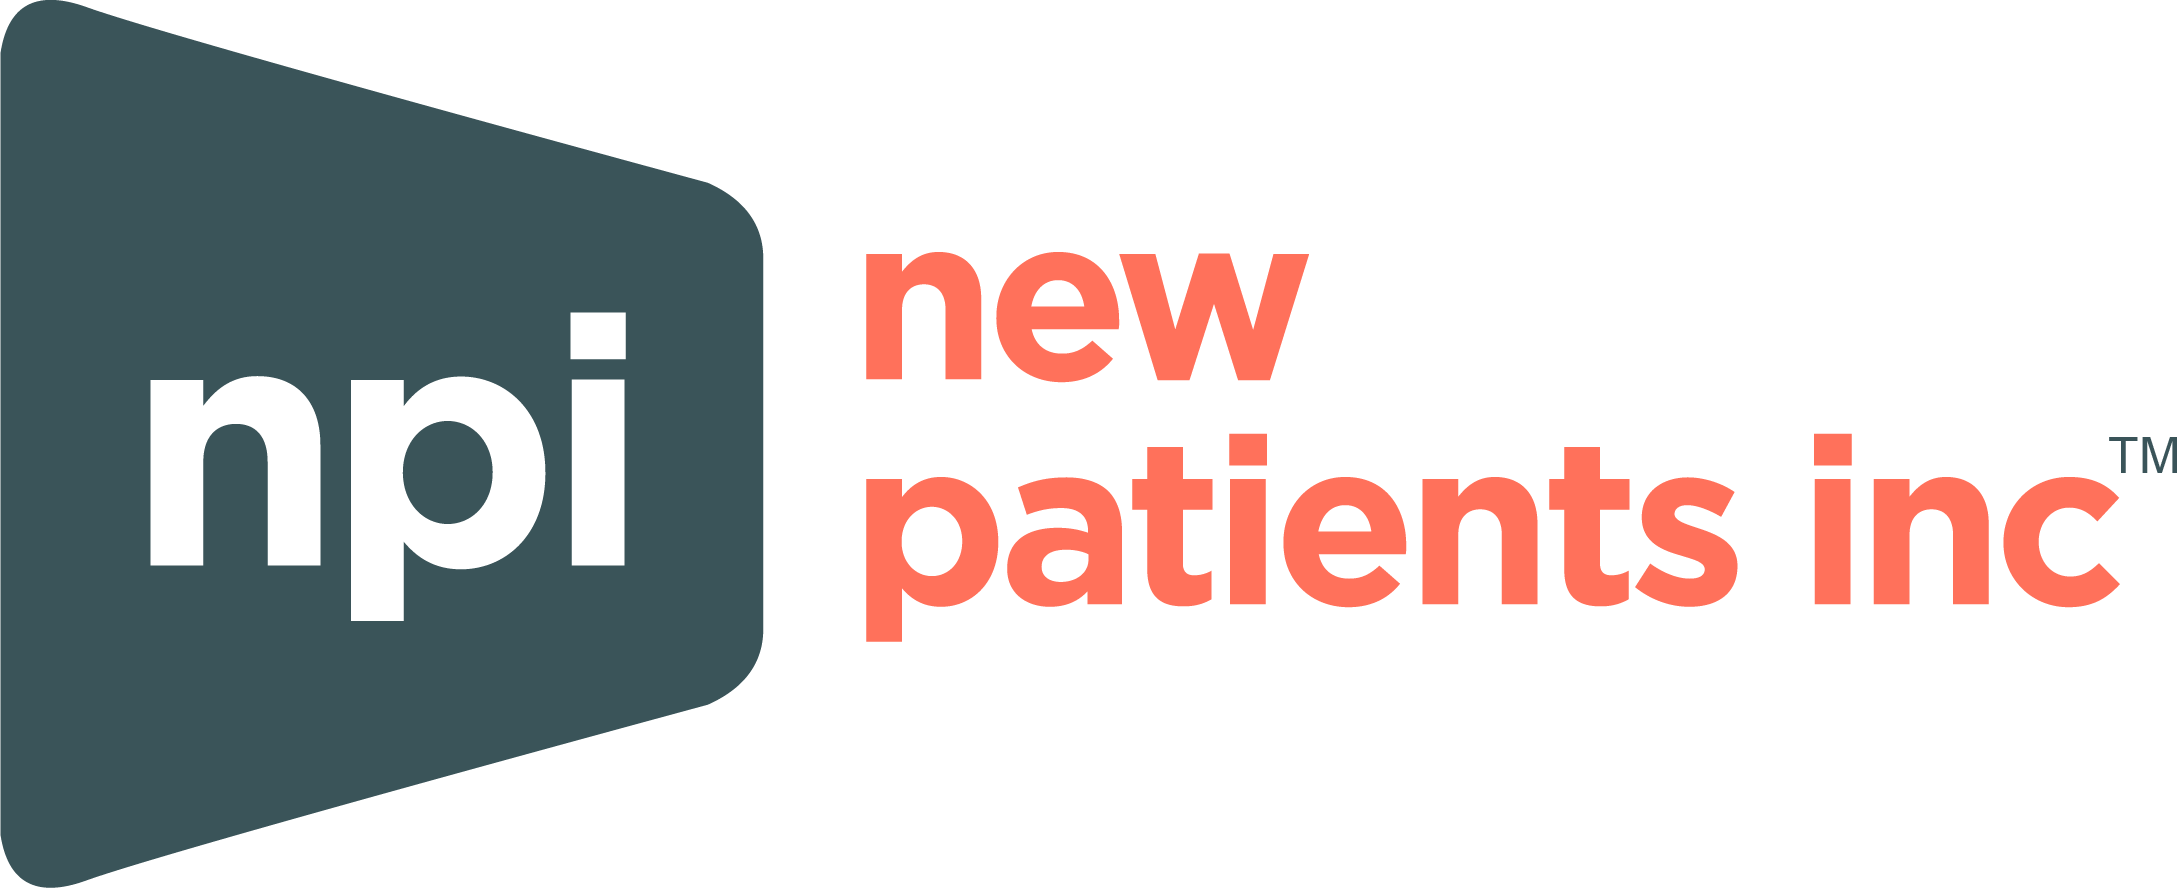 New Patients Inc Logo PNG image